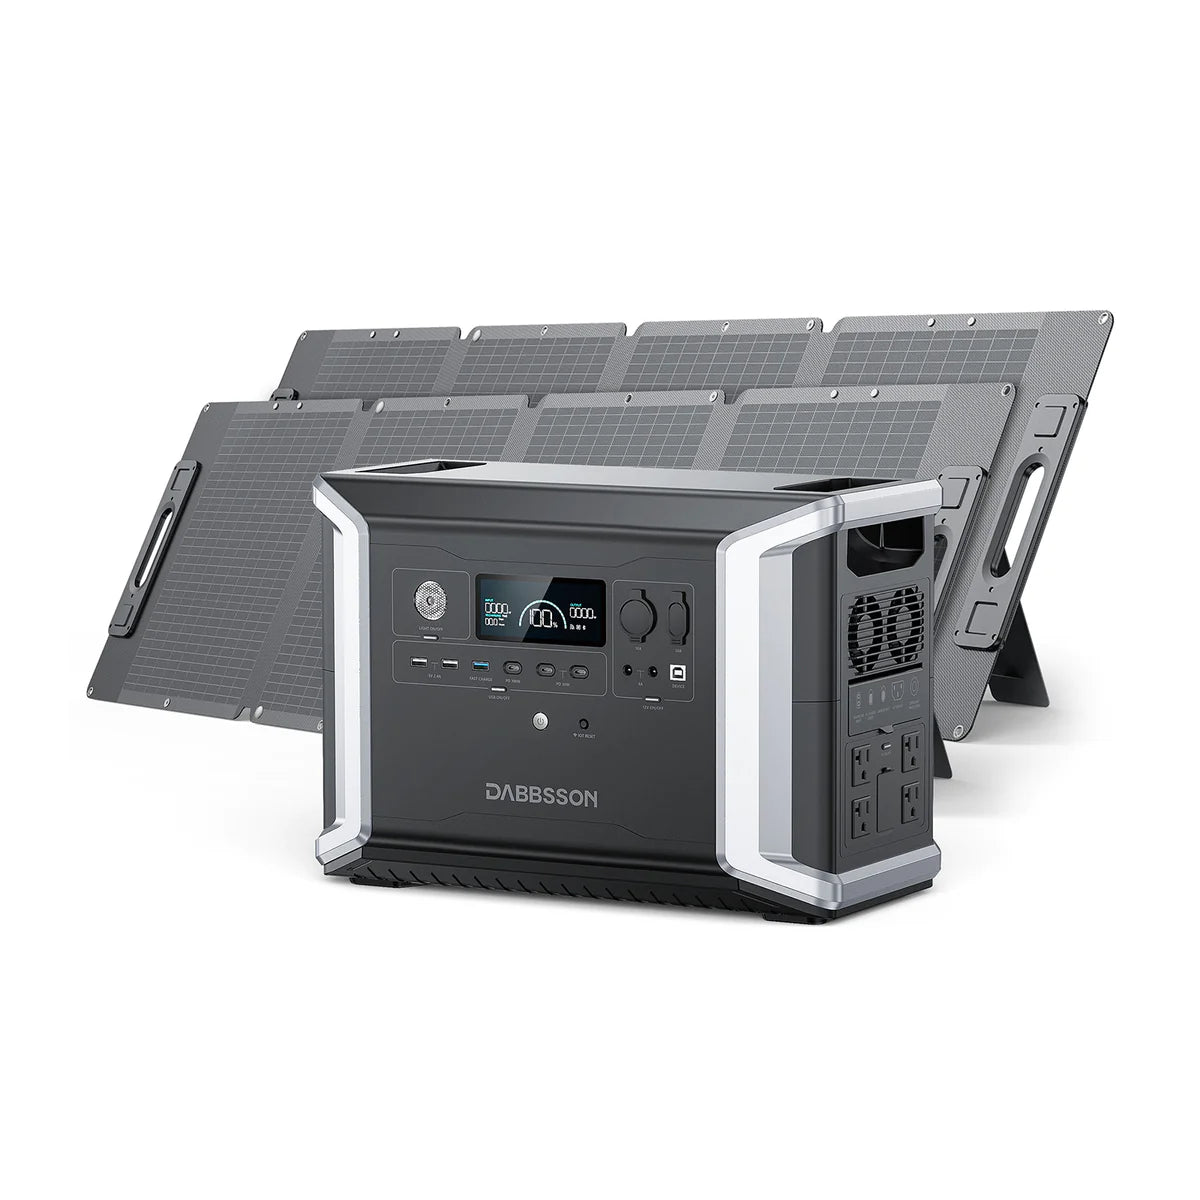 Dabbsson DBS2300 Solar Generator - 2330Wh | 2200W